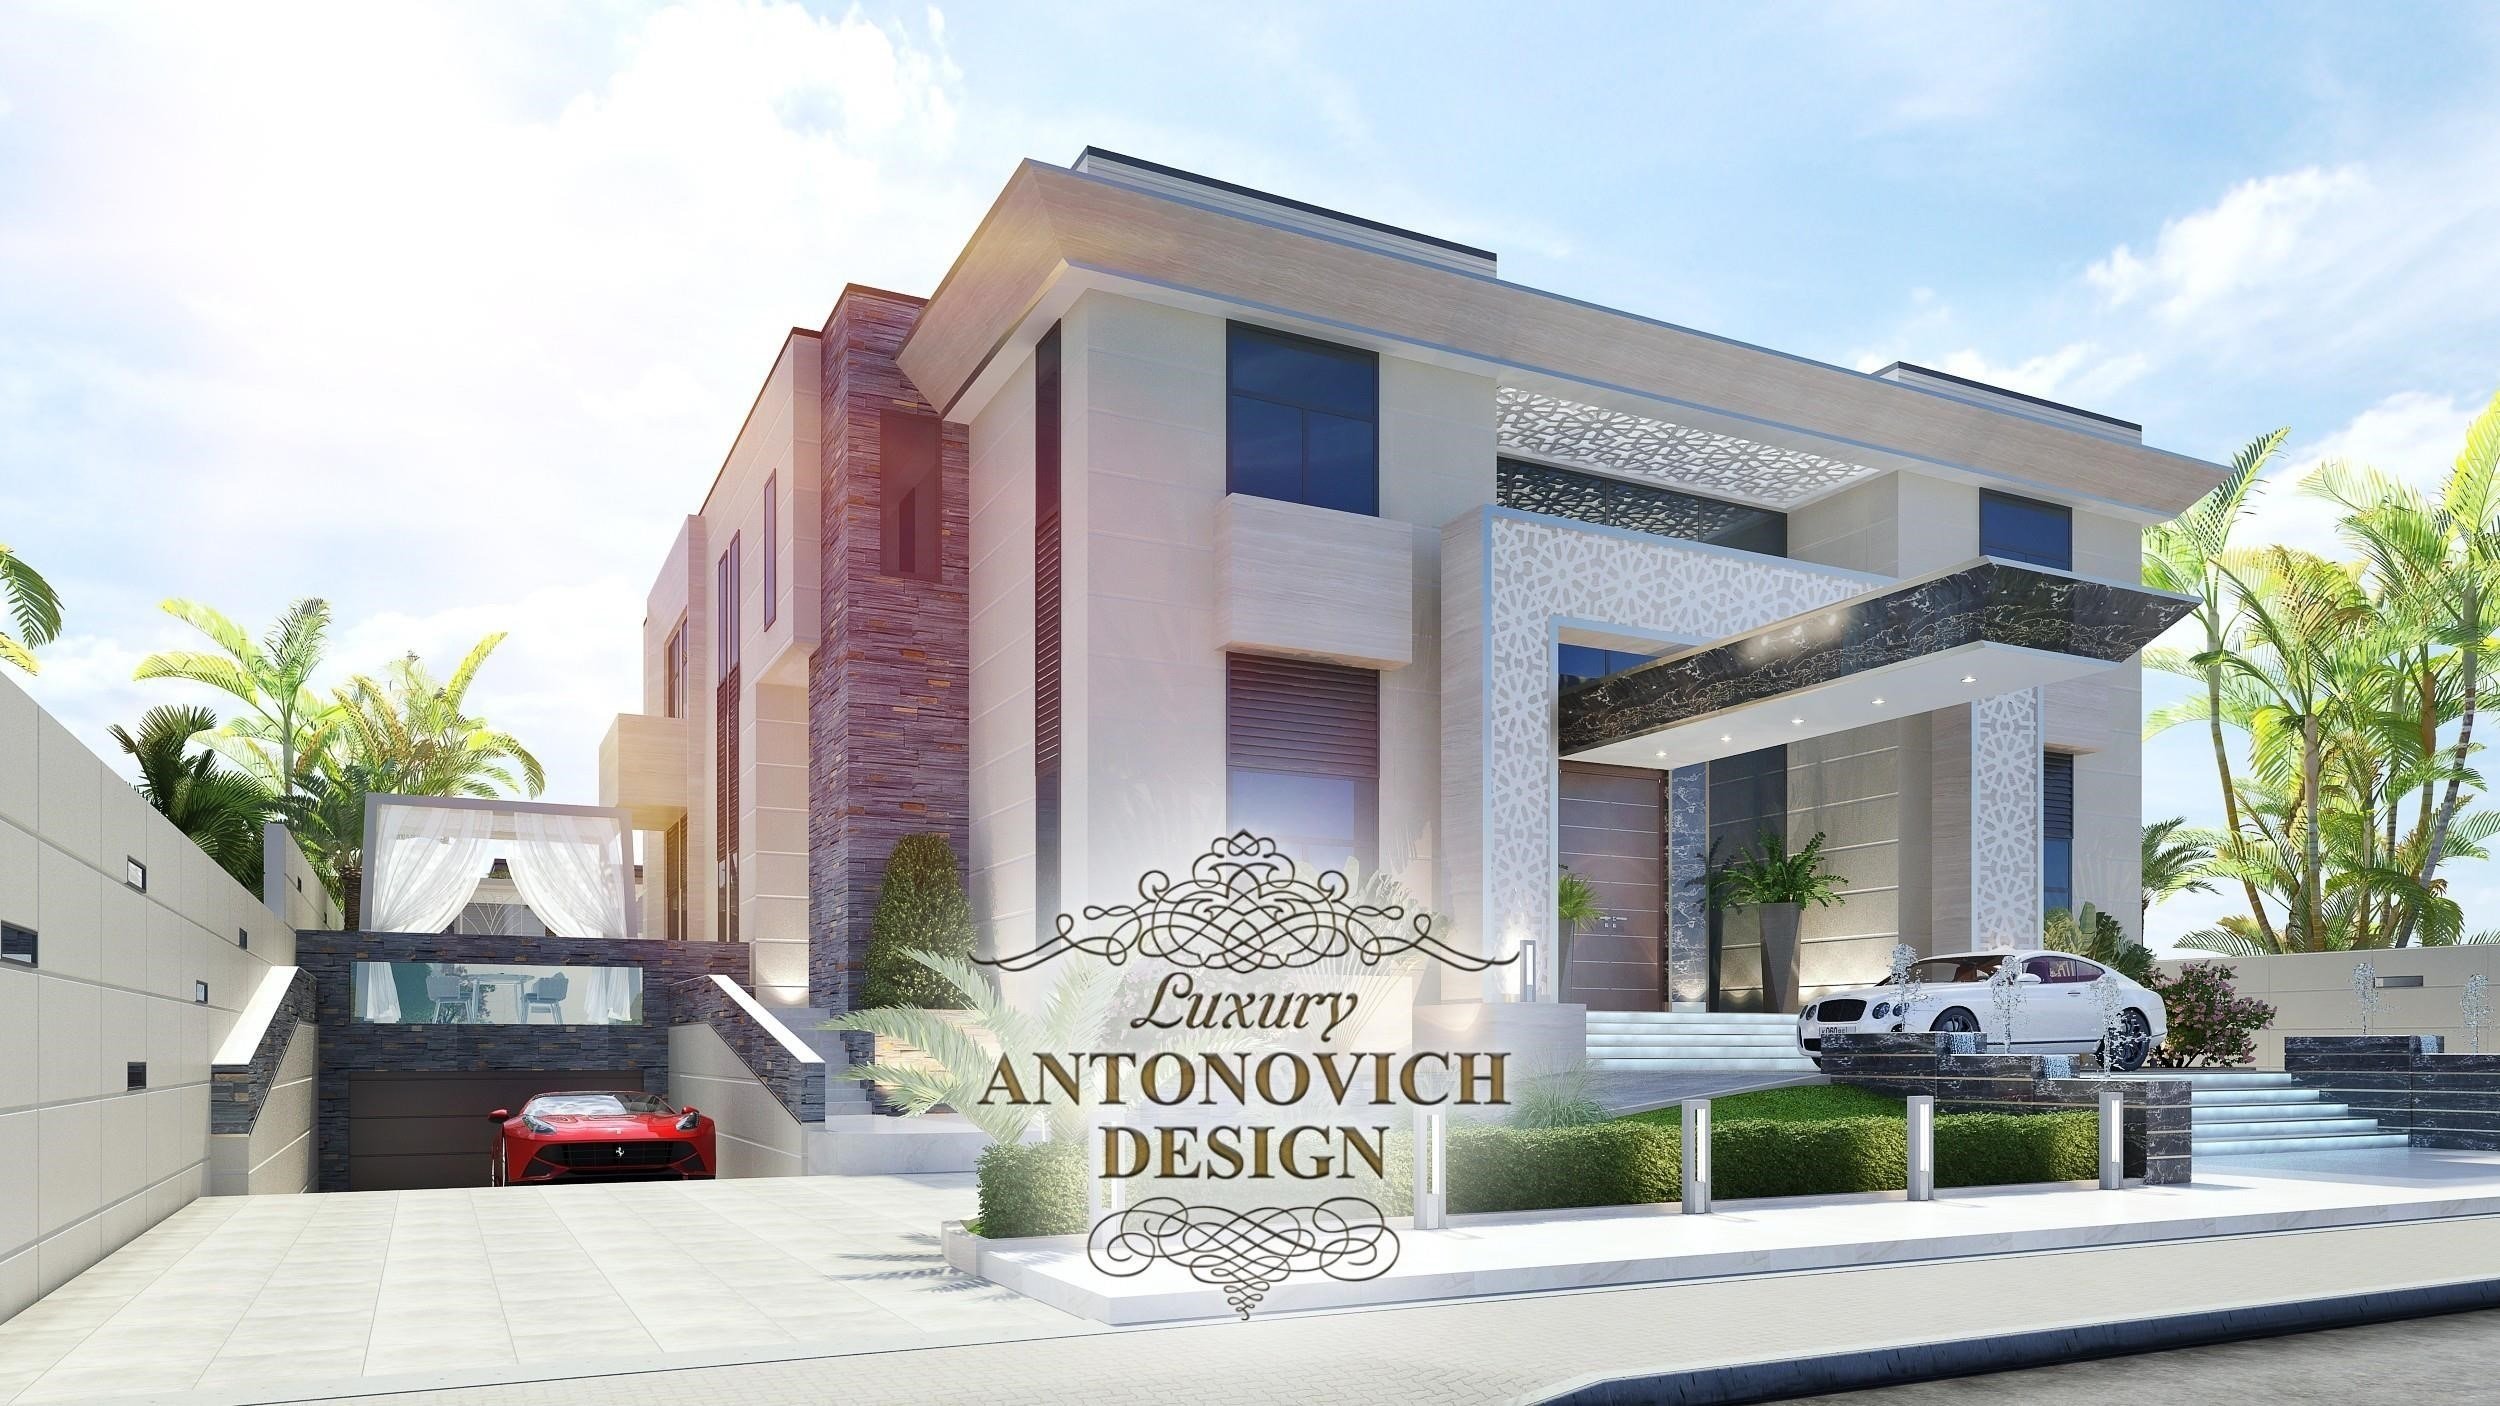 exterior-arxitekturnyj-proekt-v-stile-bungalo-antonovich-design-2